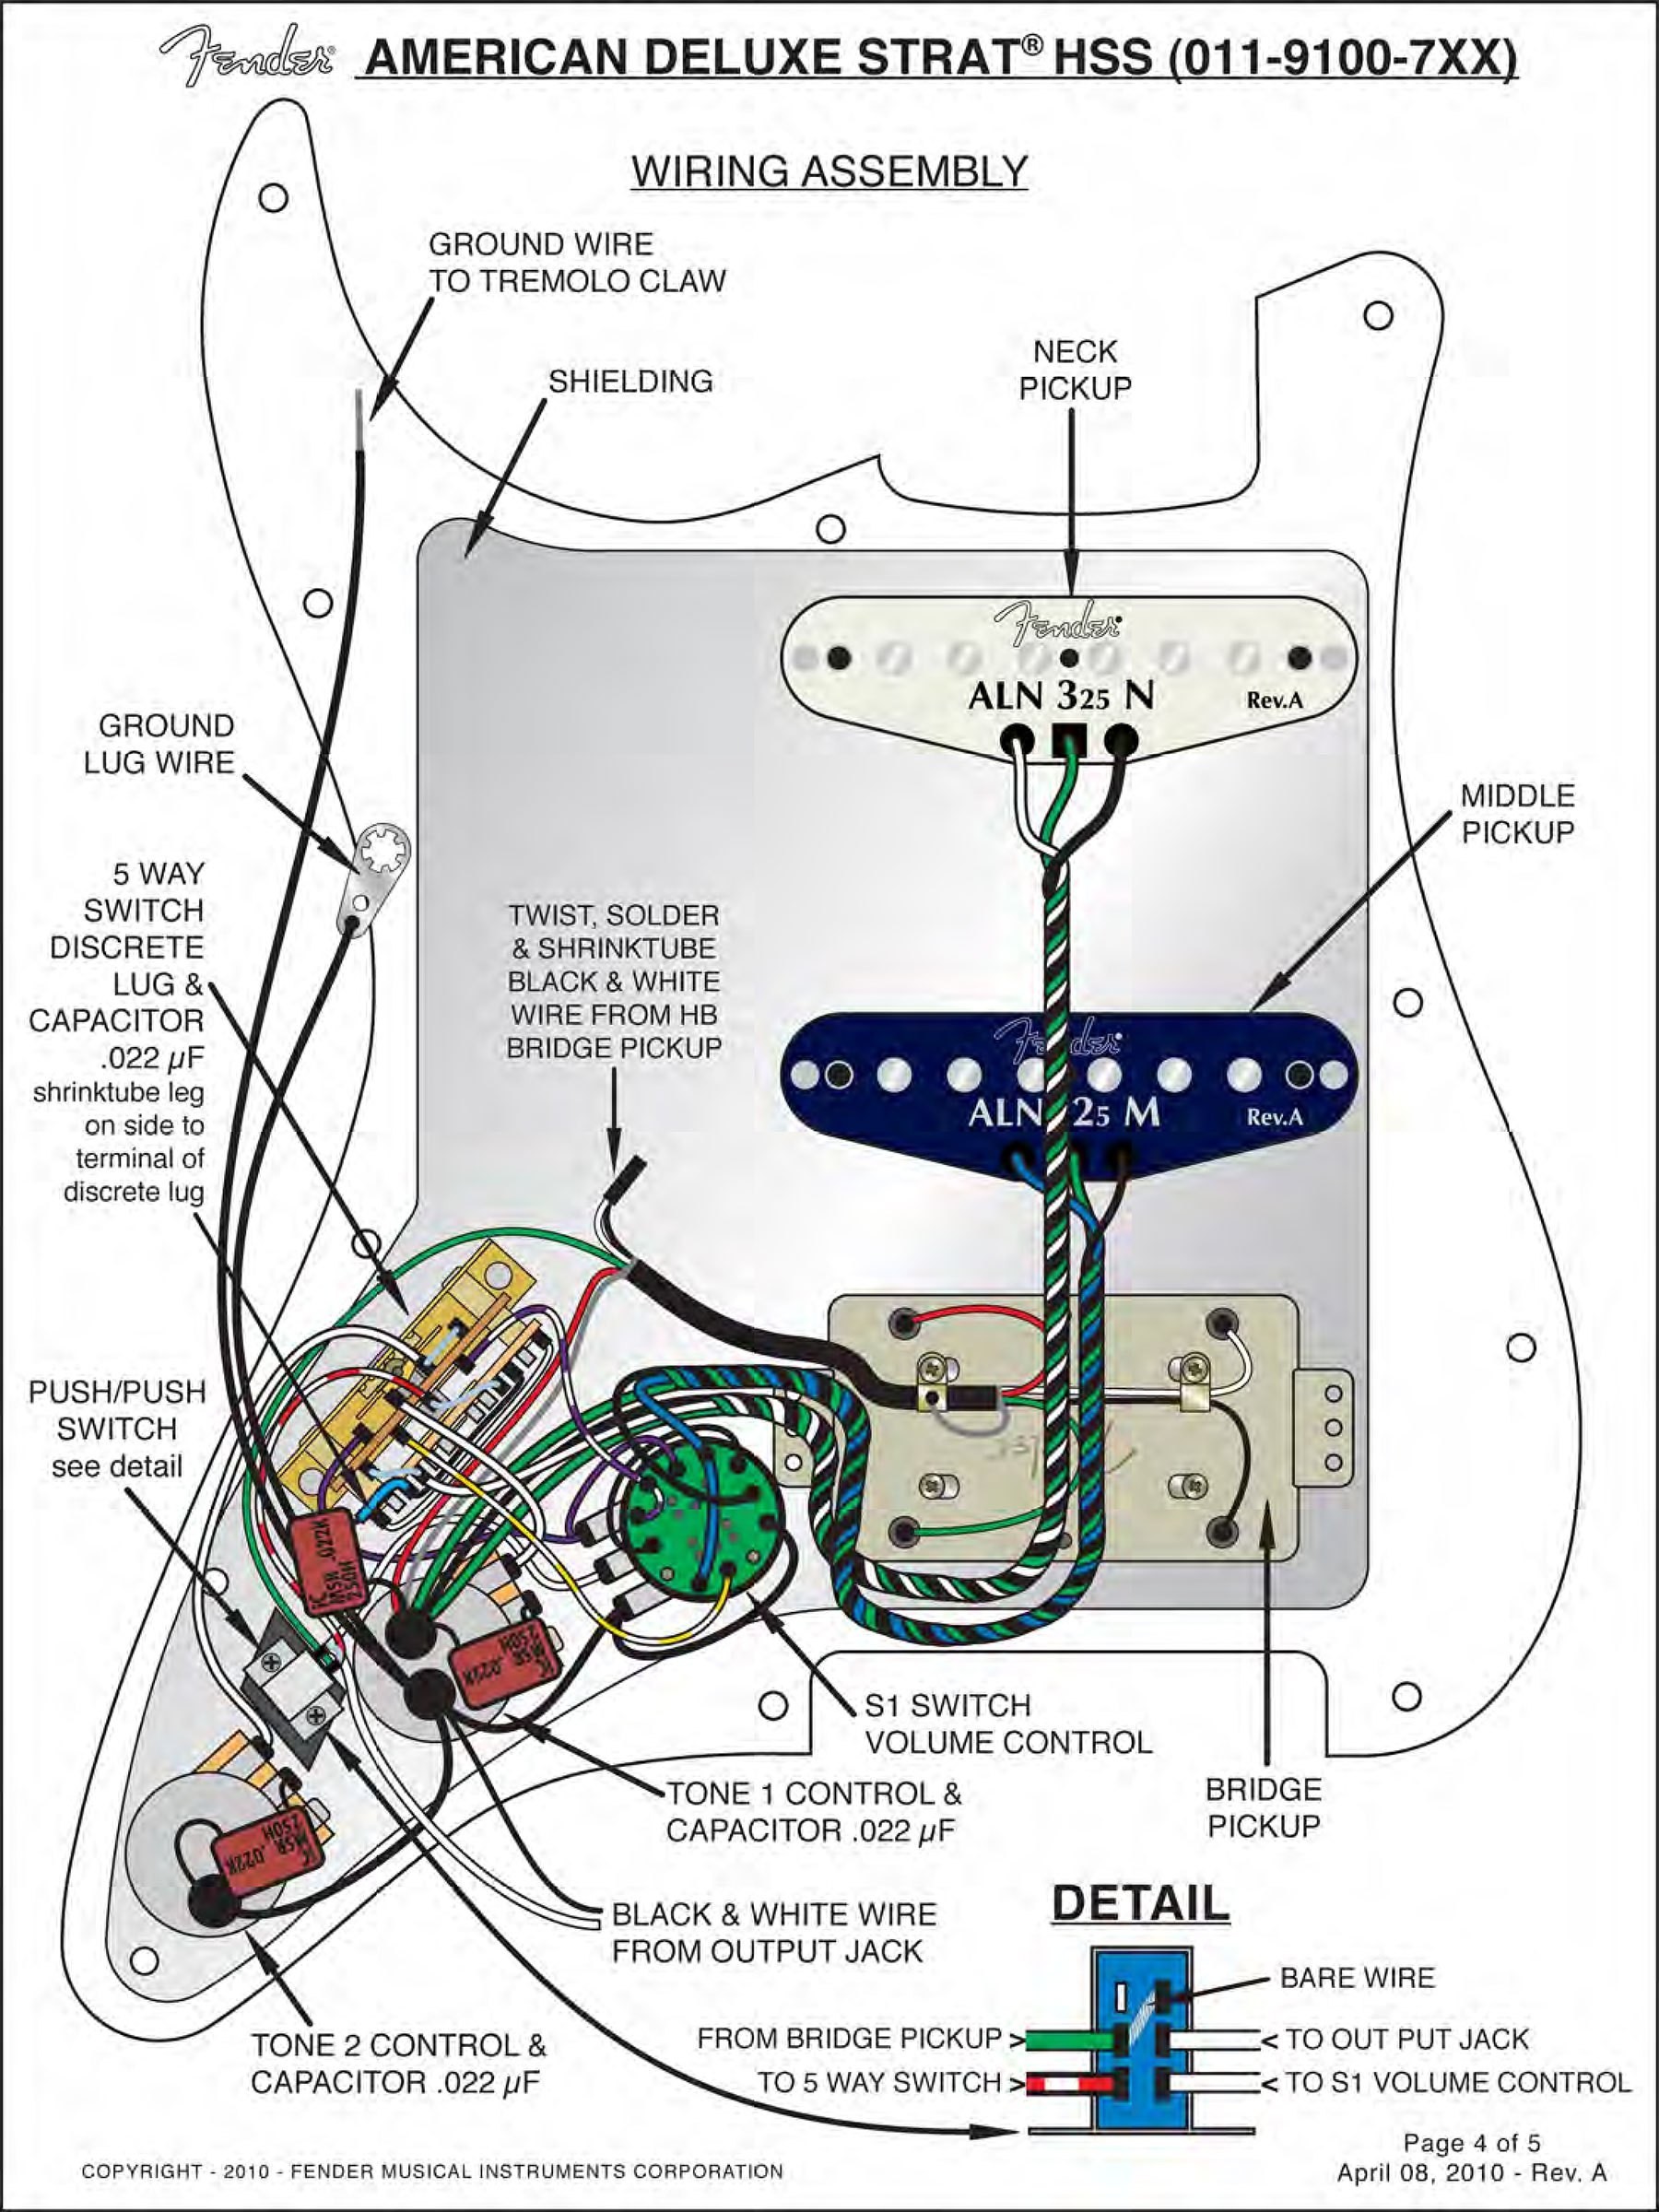 Wiring Diagram Switch Leg Fresh Wiring Diagram for Fender Stratocaster 5 Way Switch New Wiring